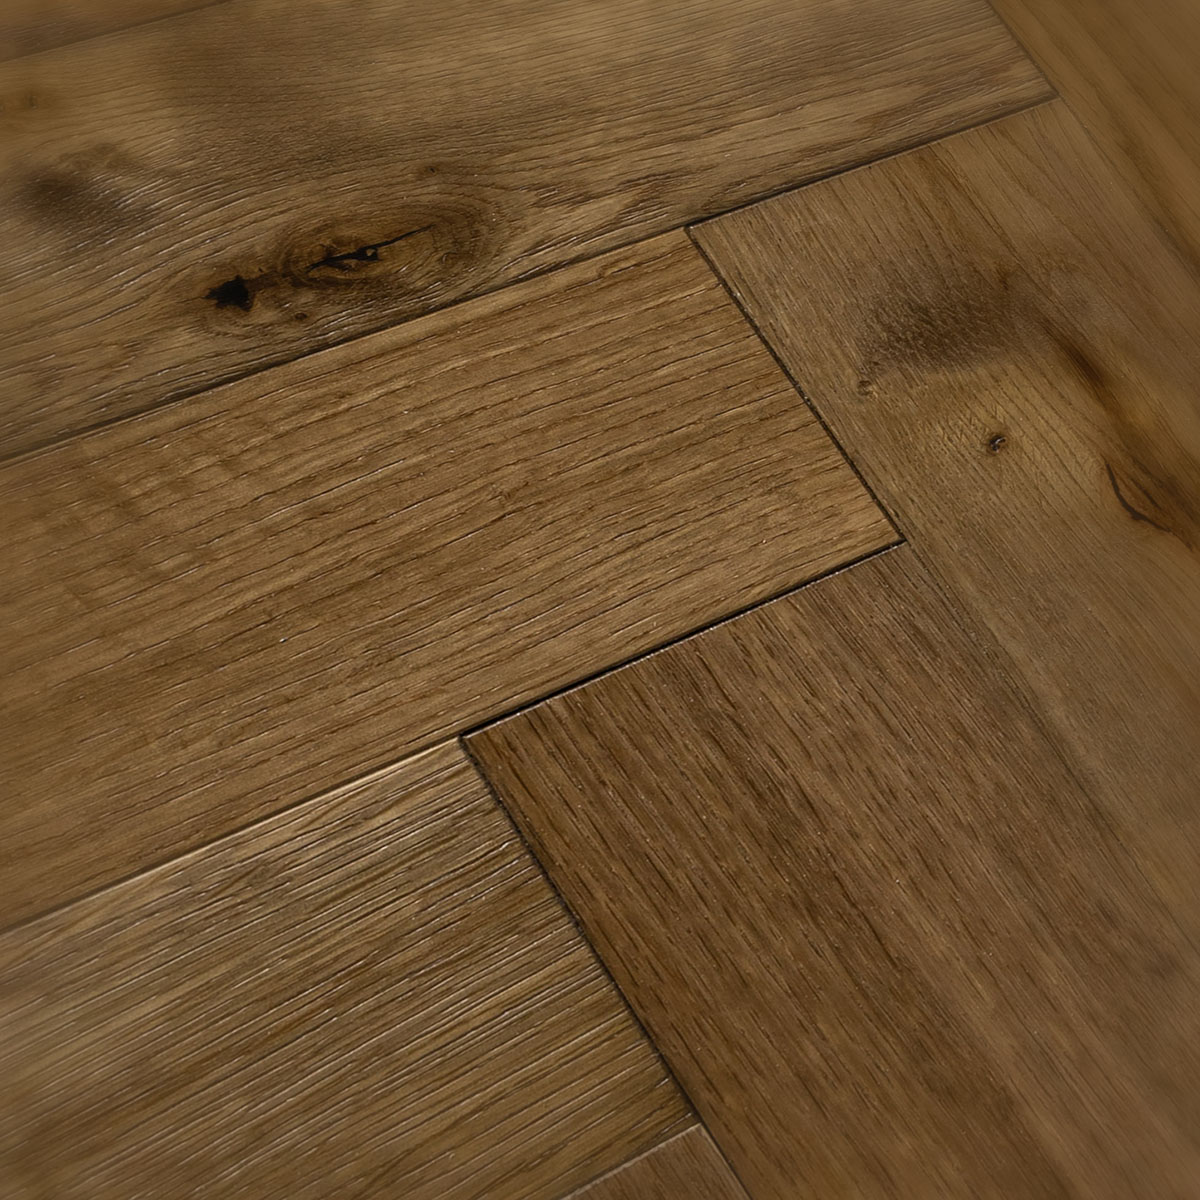 Wedgewood Drive - Rustic Oak Herringbone Floor 280mm x 70mm